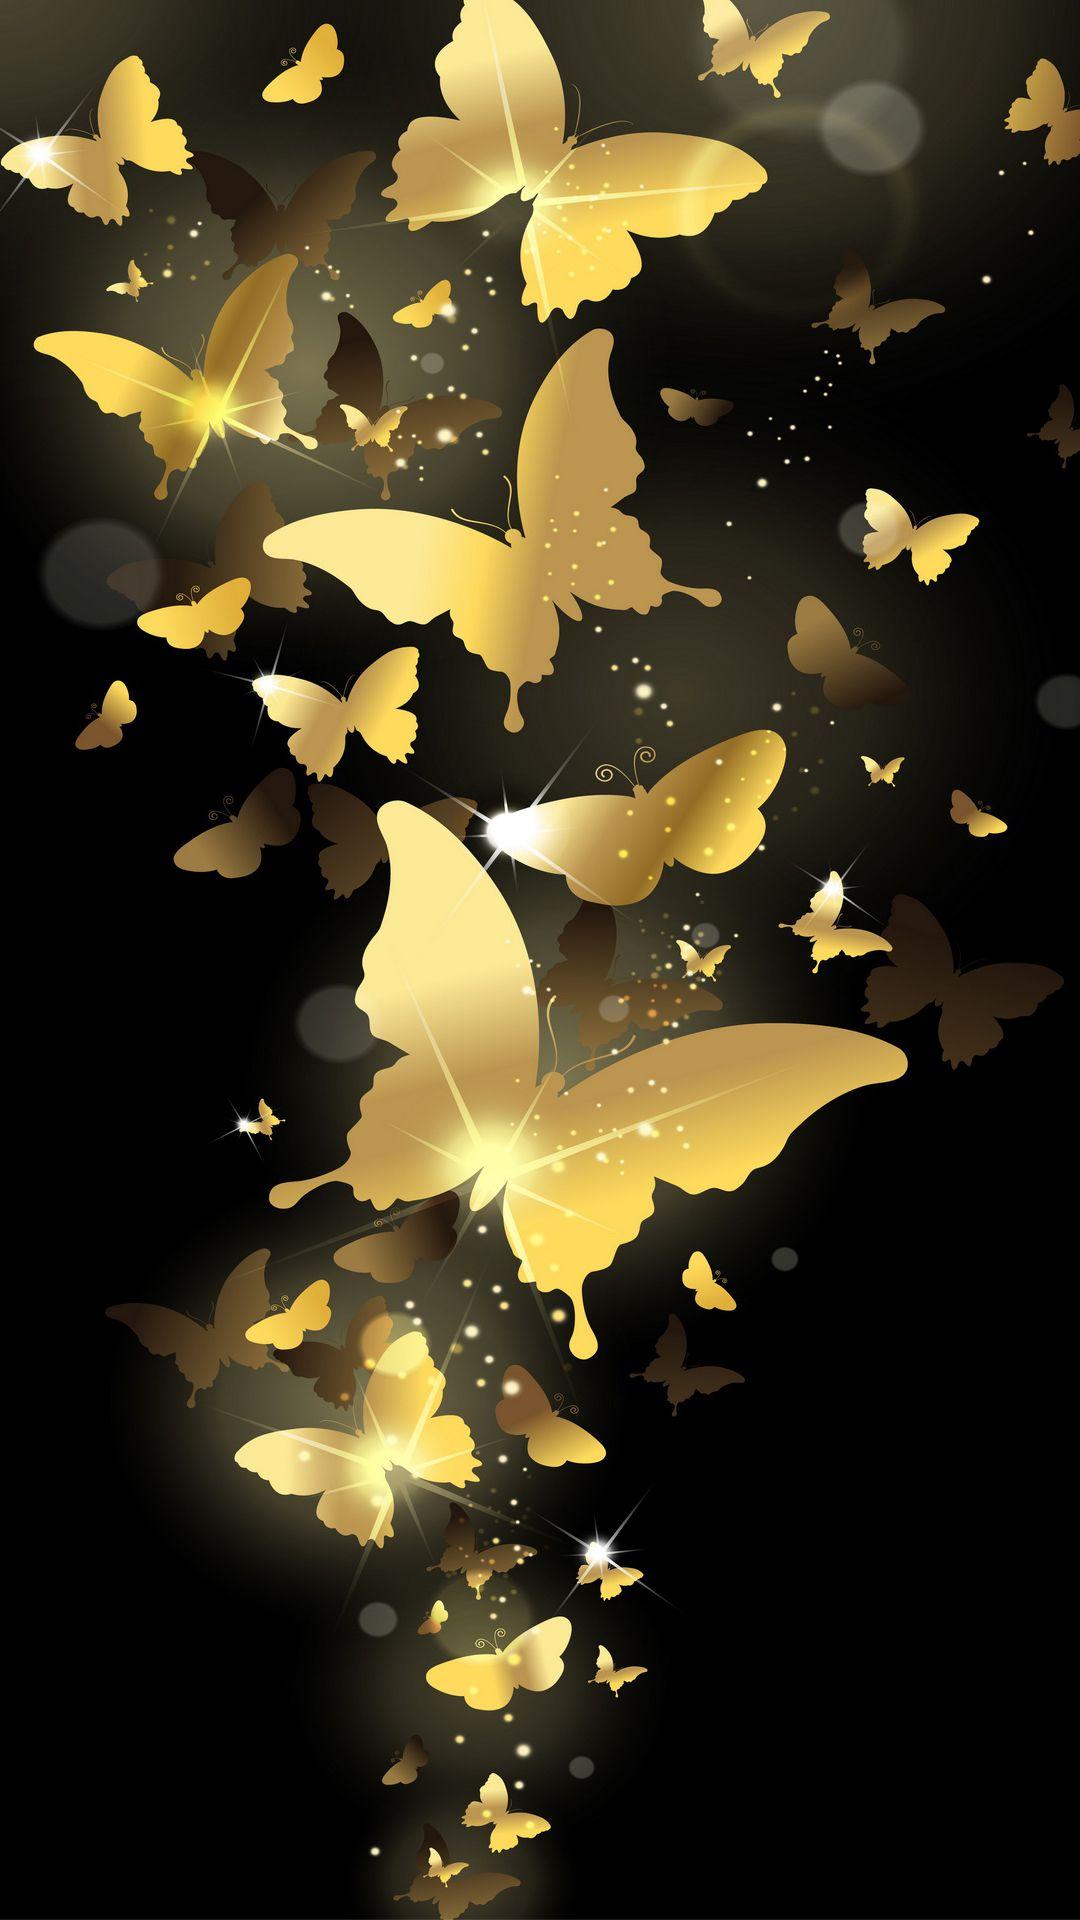 Flying Golden Butterflies Lockscreen Android Wallpaper free download